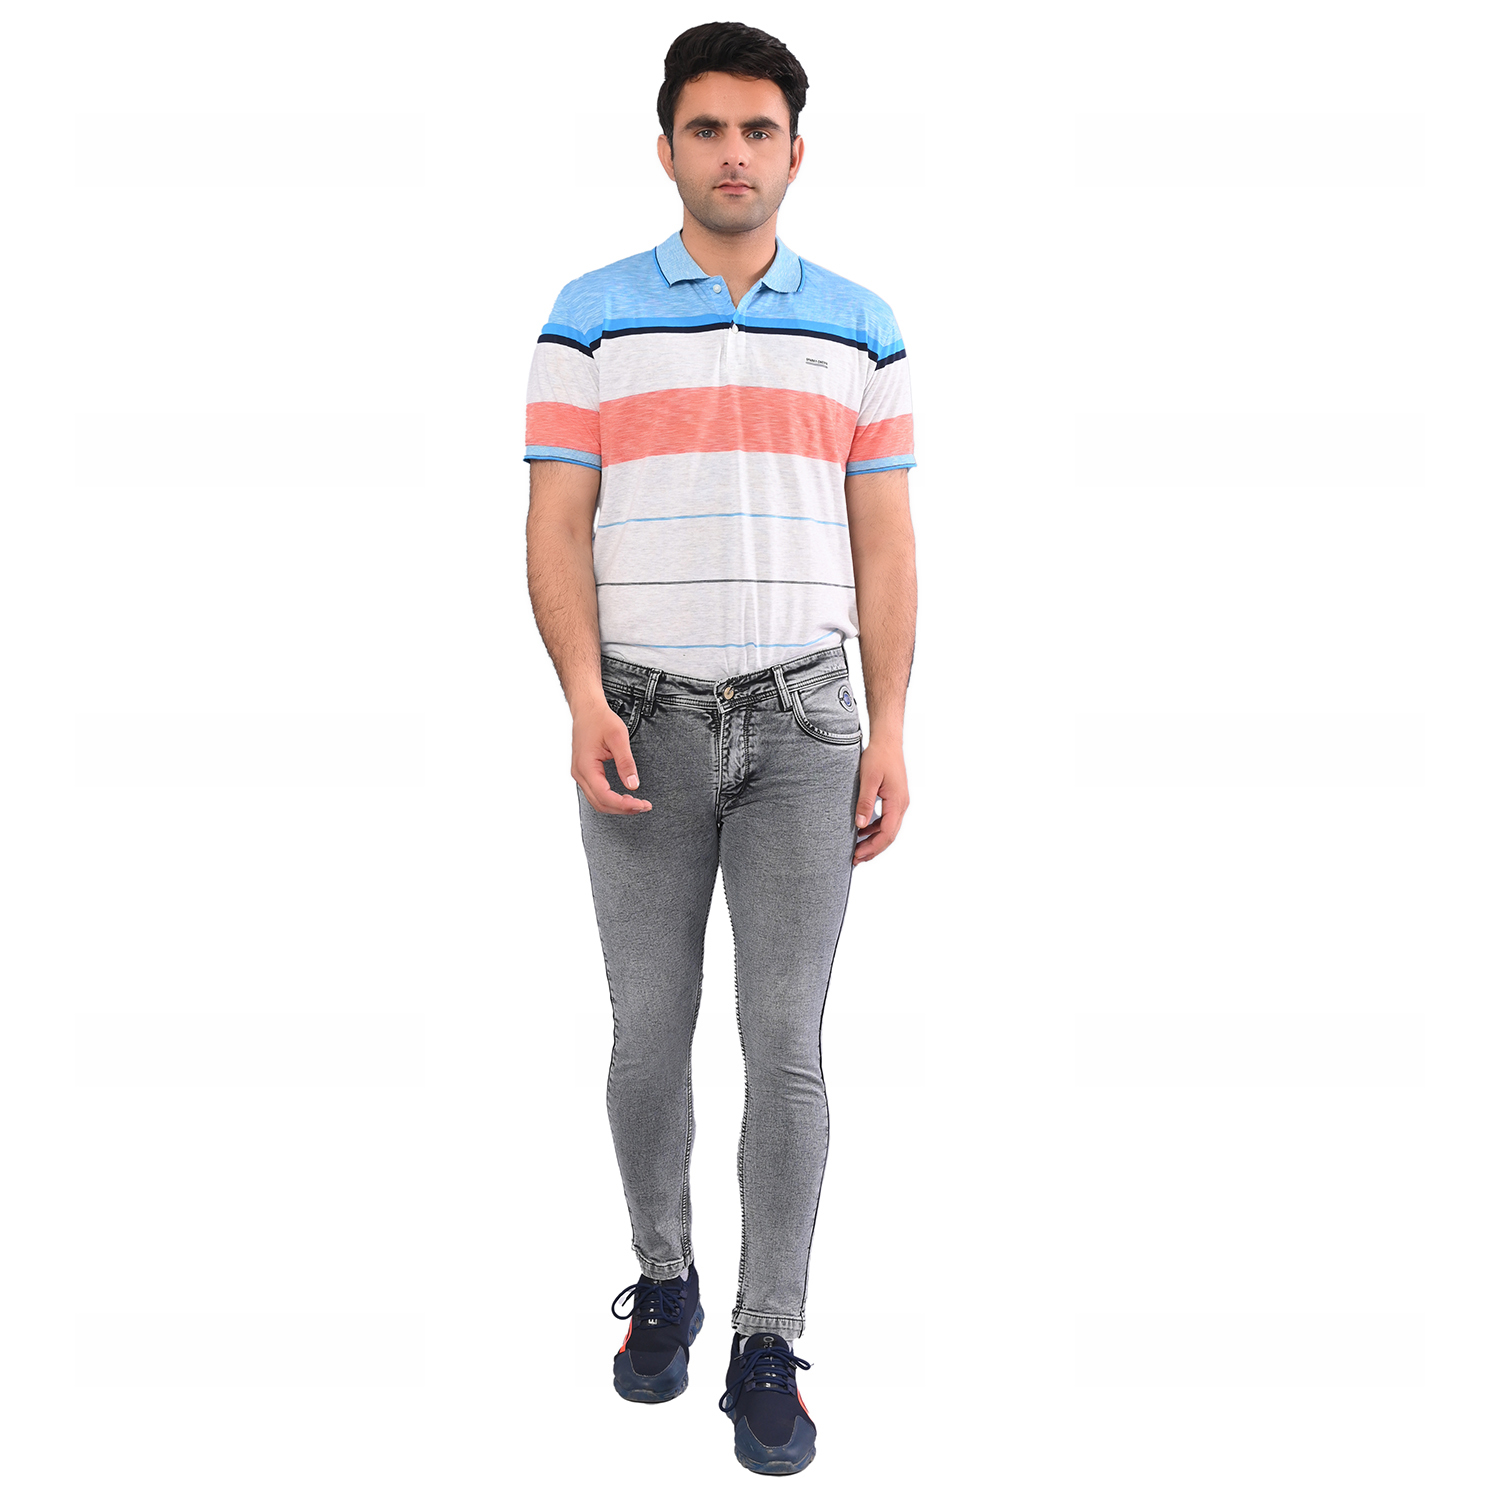 Flu Jeans for Men - 4137-1 | Udaan - B2B Buying for Retailers